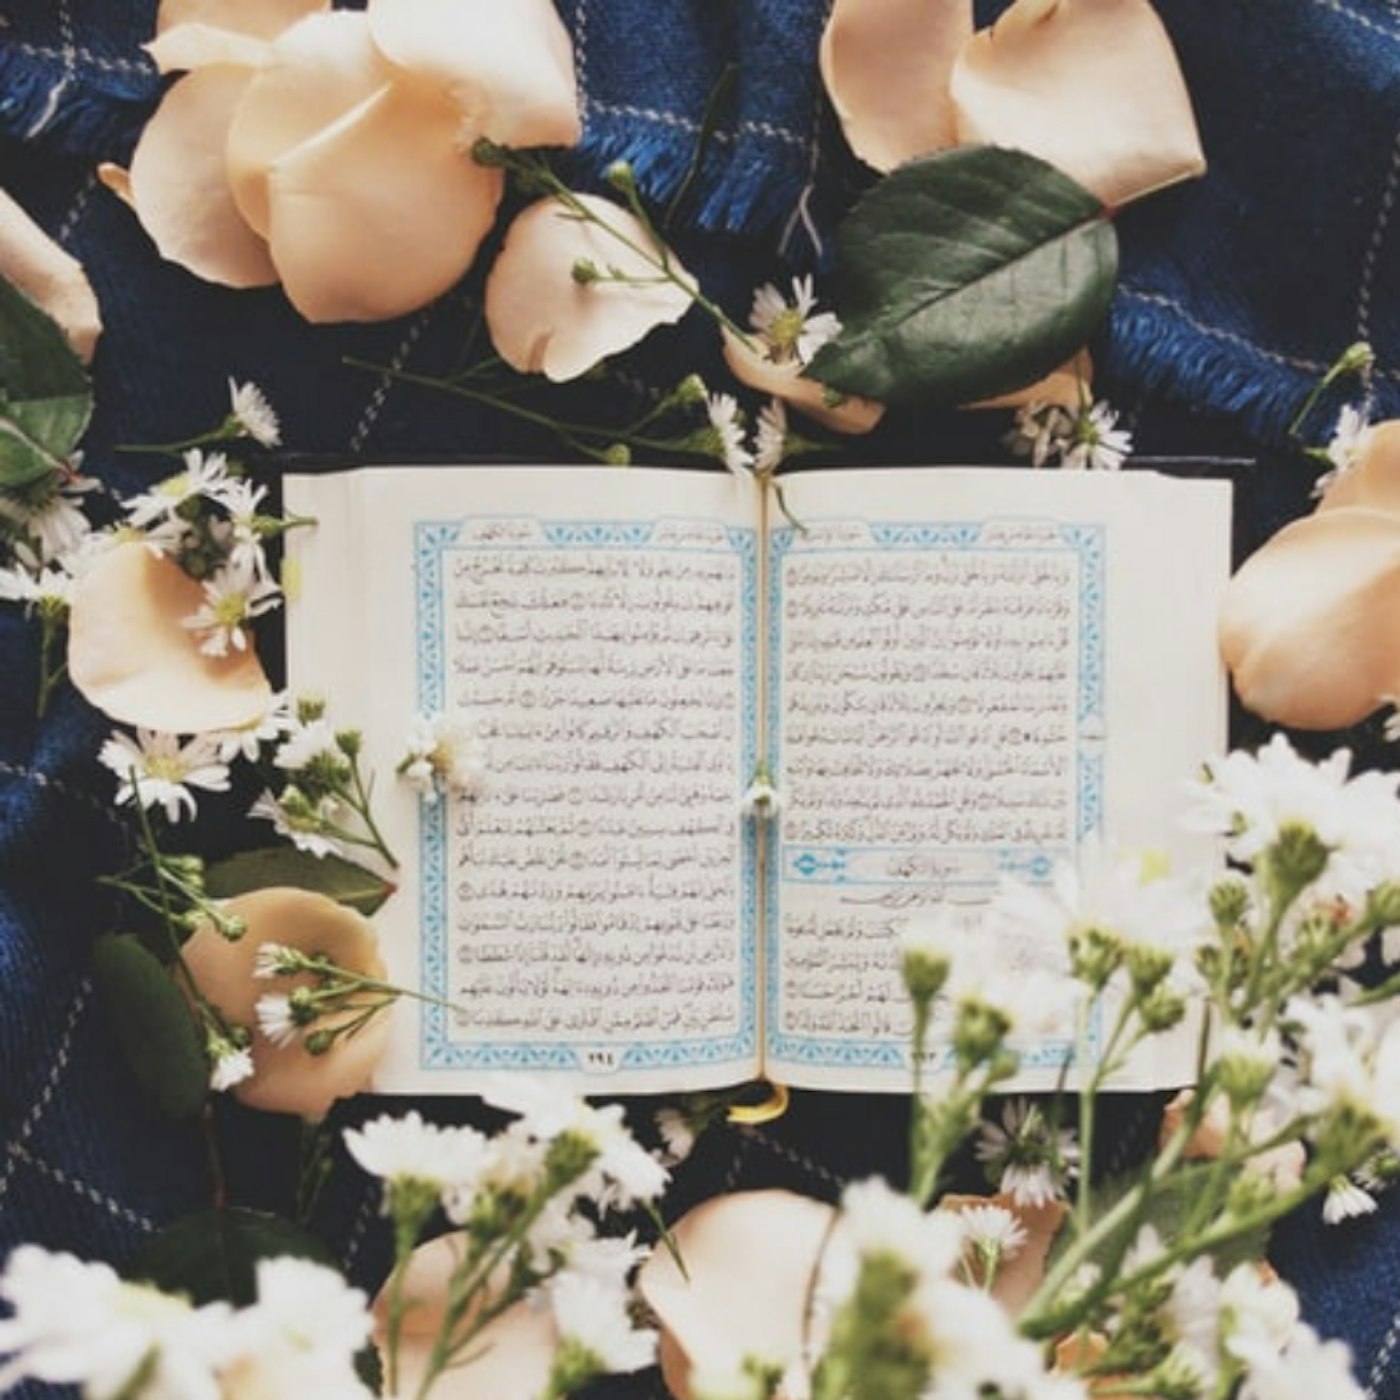 dua with 25 beautiful islamic sayings